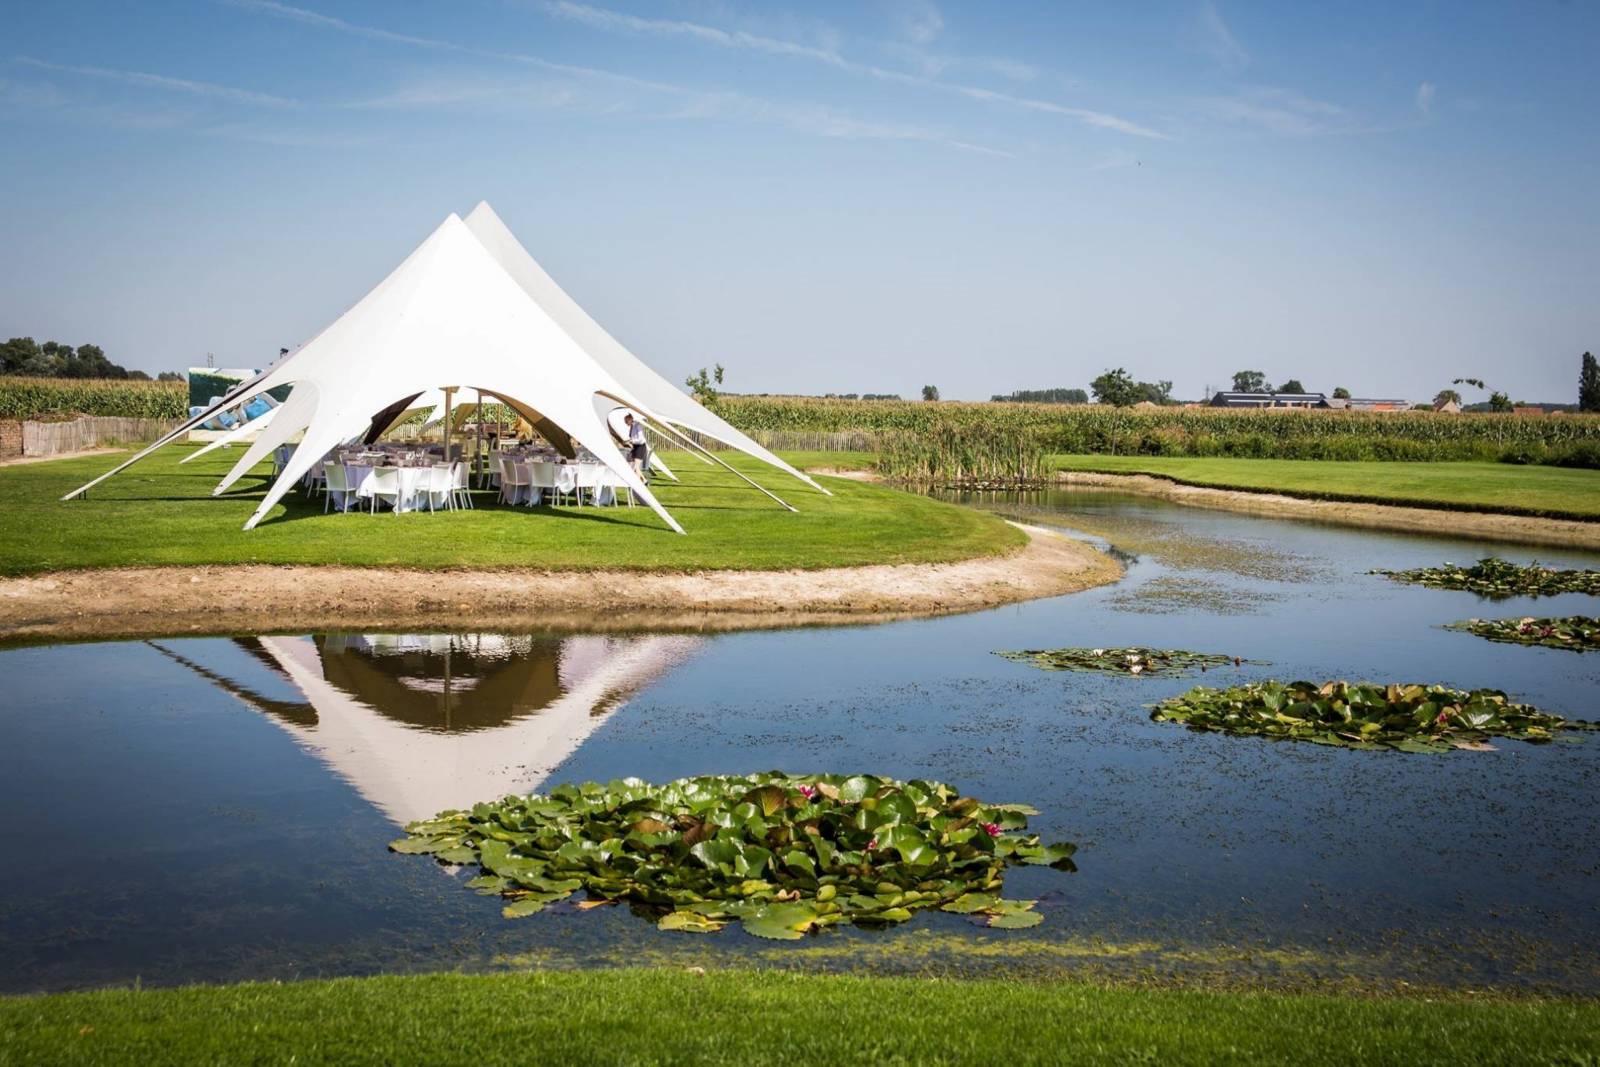 House of Weddings Domein t Eikennest Feestzaal West-Vlaanderen Diksmuide Beerst Tuin Park Vijver Tent Ceremonie Schuur polder (1)